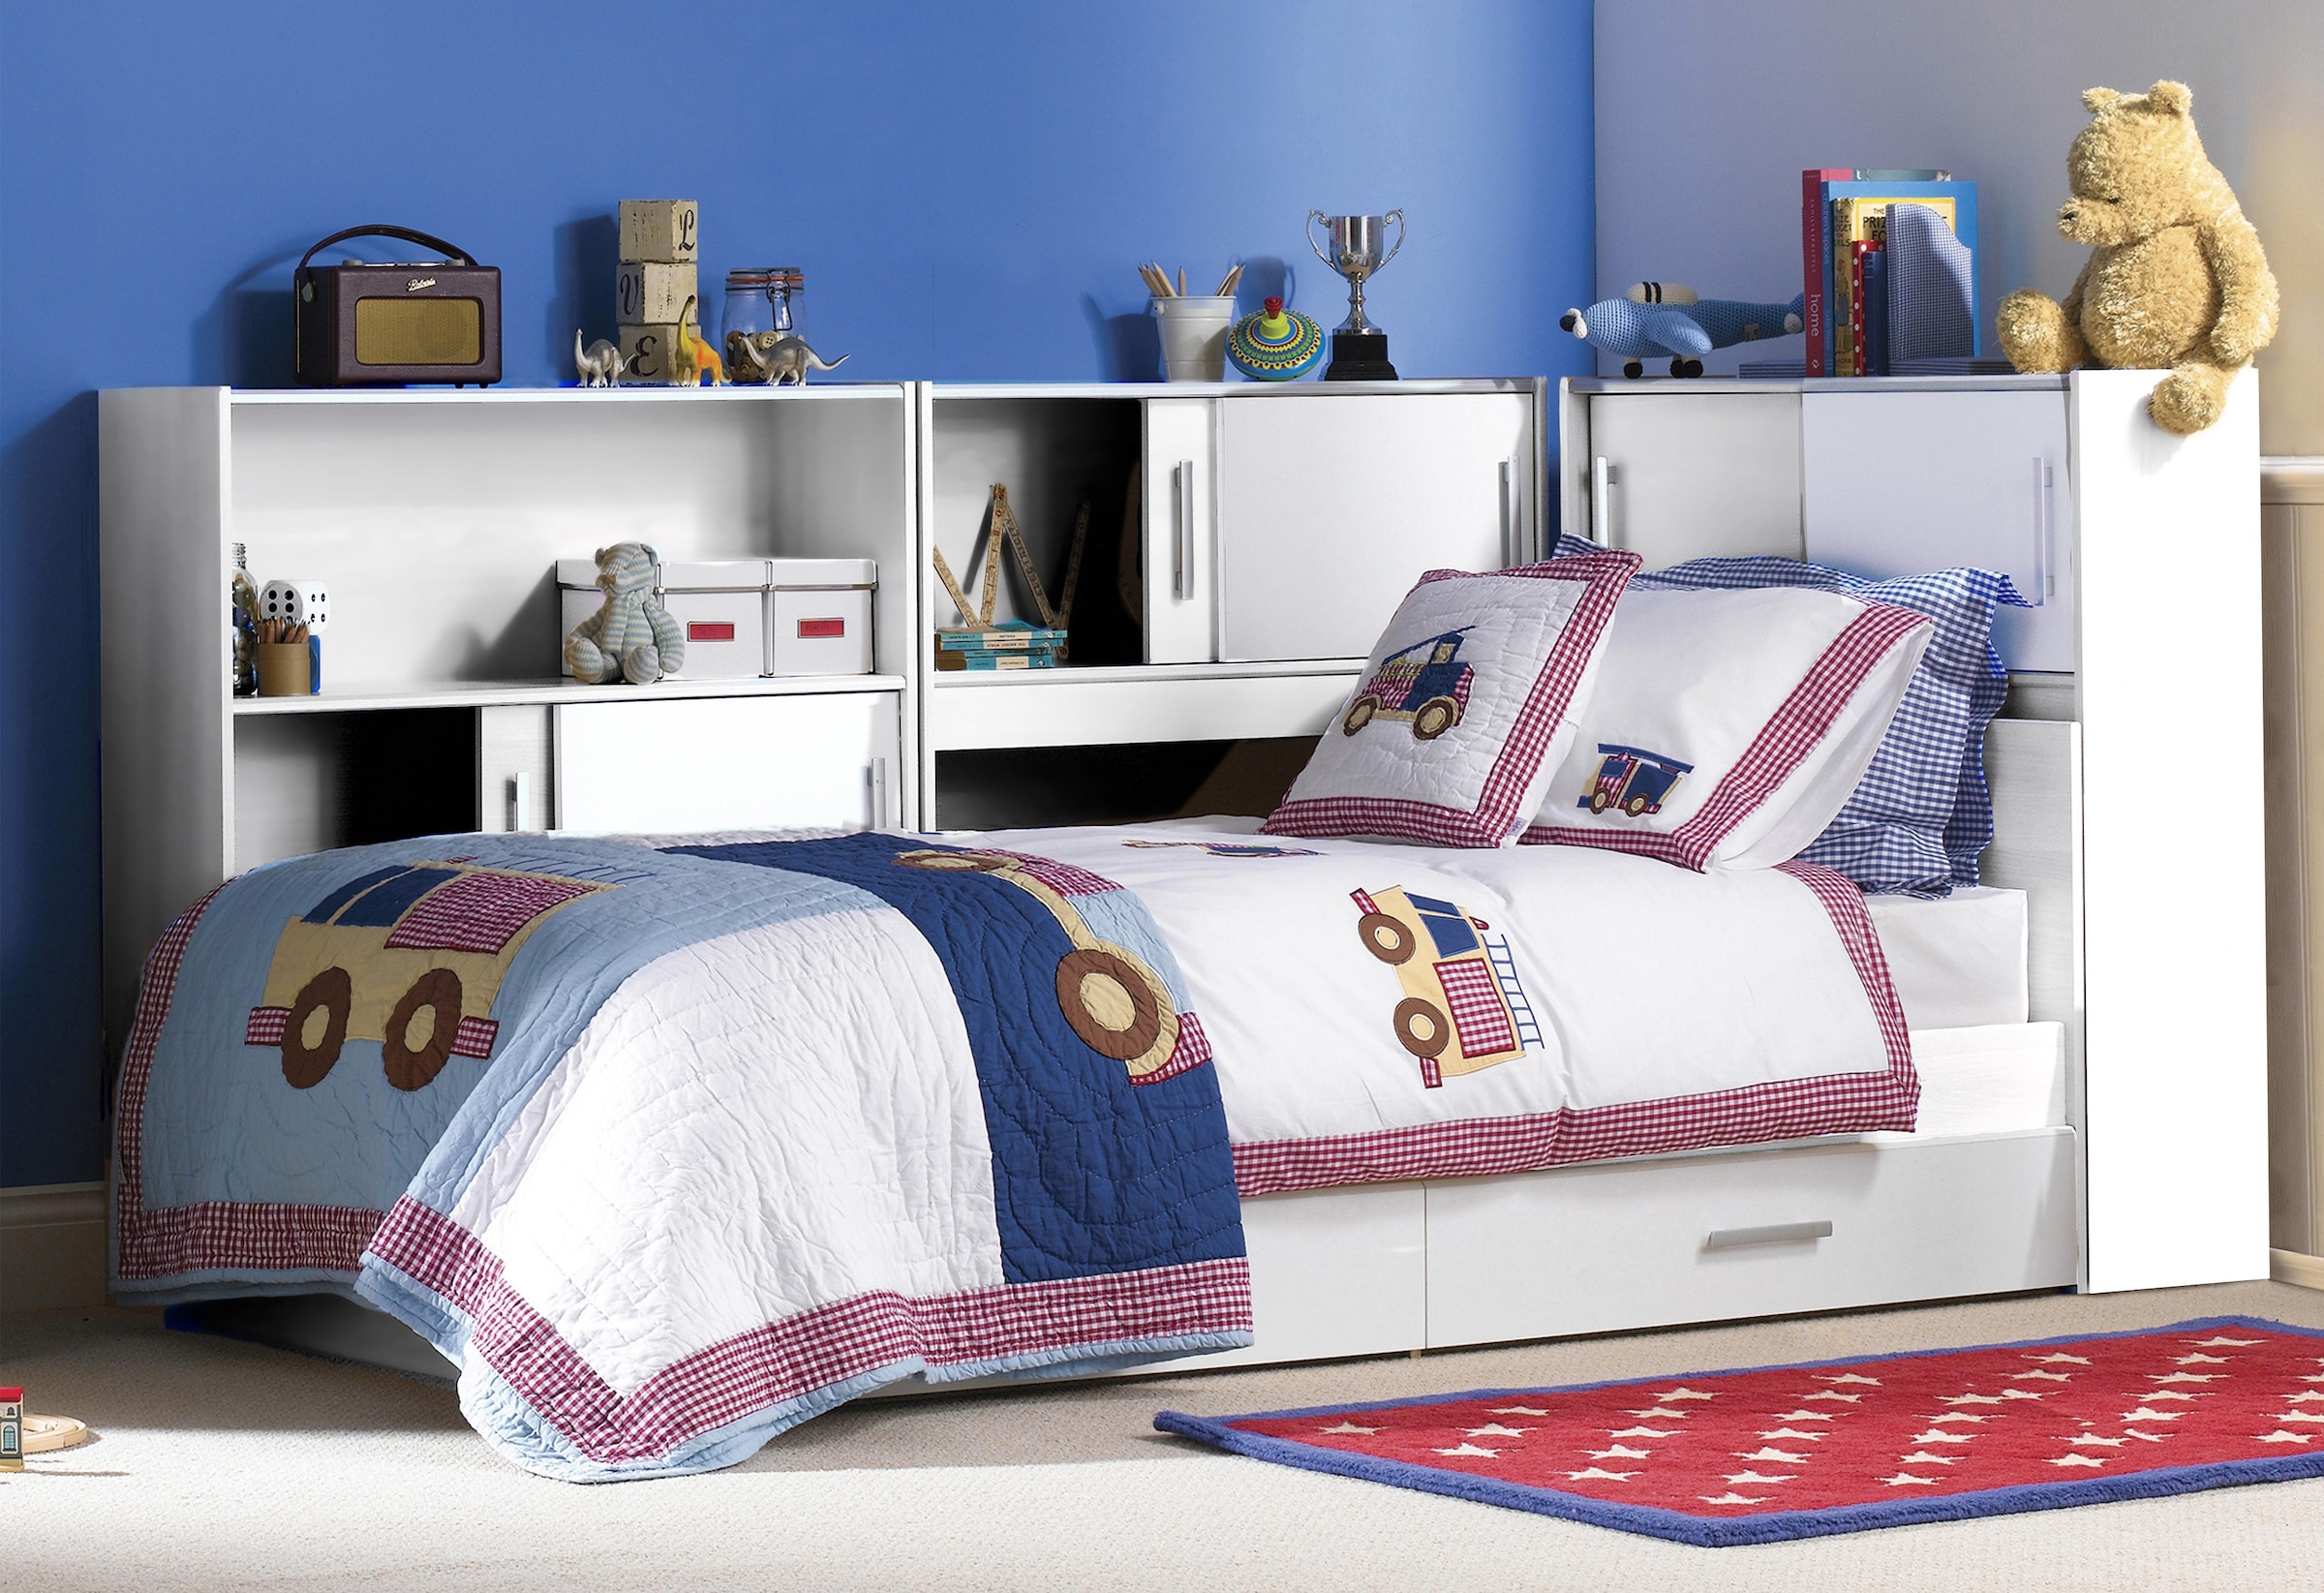 Jugendbett »Snoopy 1«, Einzelbett, Kinderbett